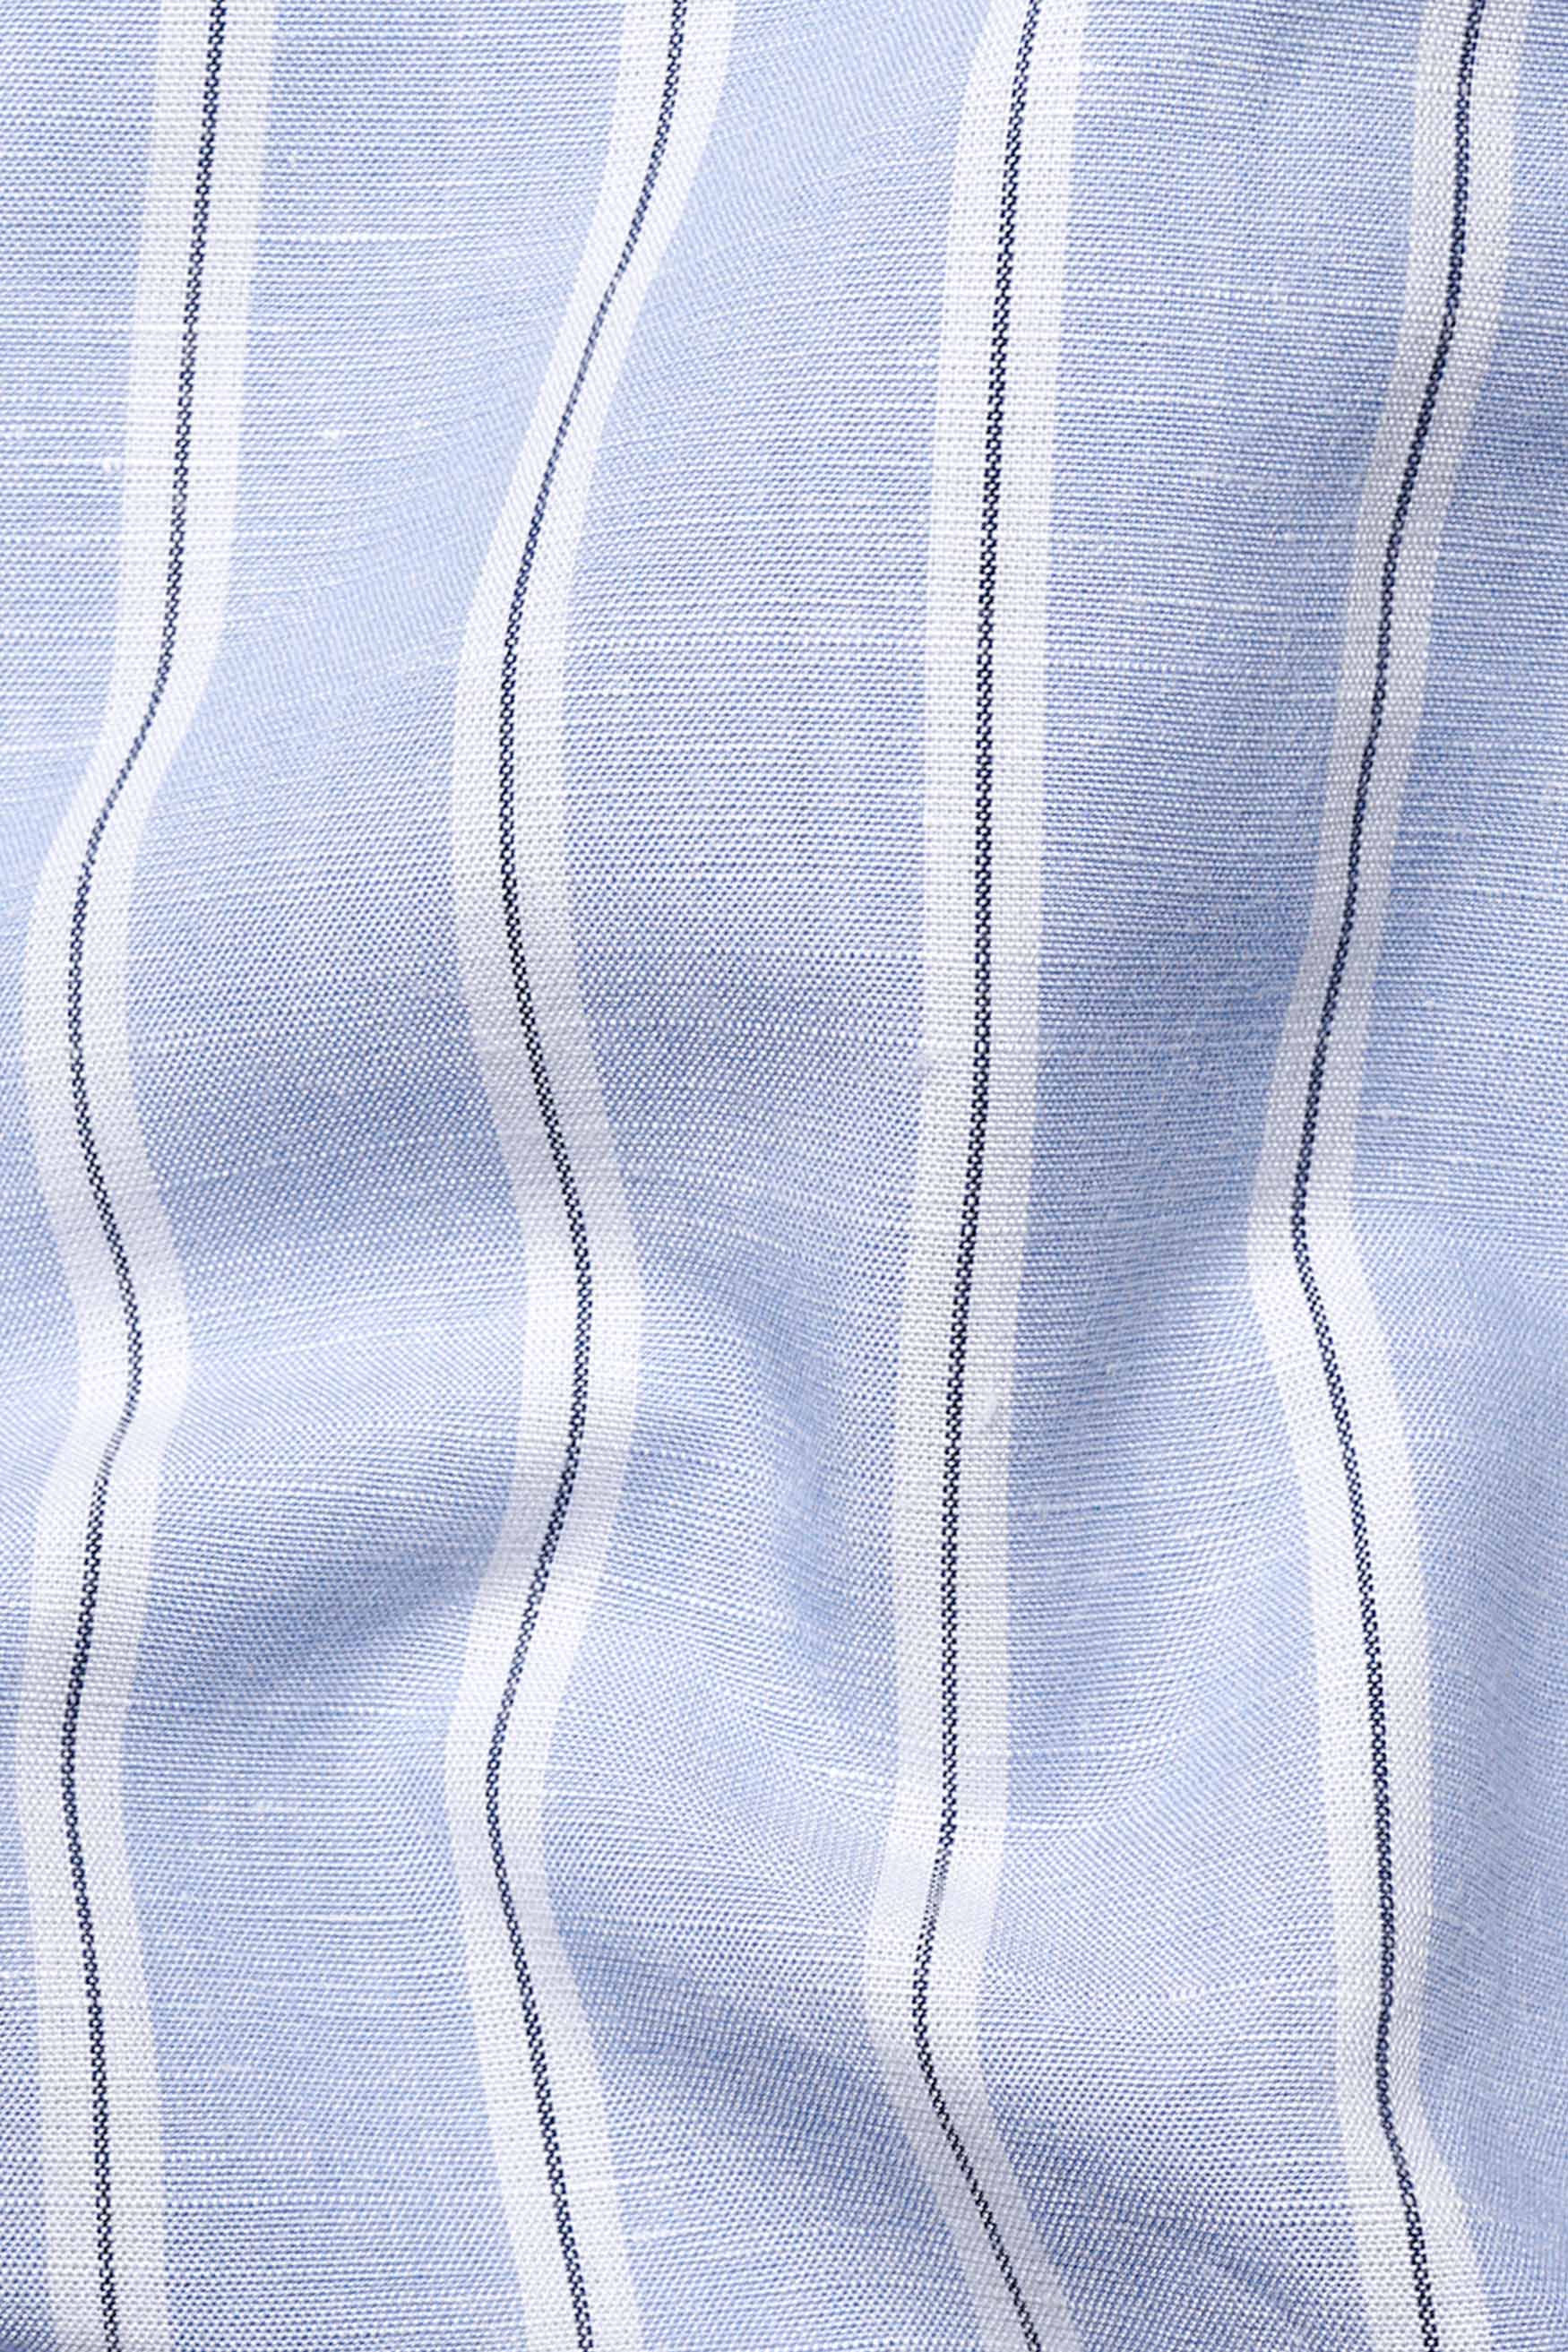 Periwinkle Blue and White Striped Embroidered Twill Premium Cotton Designer Signature Shirt 7572-E186-38, 7572-E186-H-38, 7572-E186-39, 7572-E186-H-39, 7572-E186-40, 7572-E186-H-40, 7572-E186-42, 7572-E186-H-42, 7572-E186-44, 7572-E186-H-44, 7572-E186-46, 7572-E186-H-46, 7572-E186-48, 7572-E186-H-48, 7572-E186-50, 7572-E186-H-50, 7572-E186-52, 7572-E186-H-52